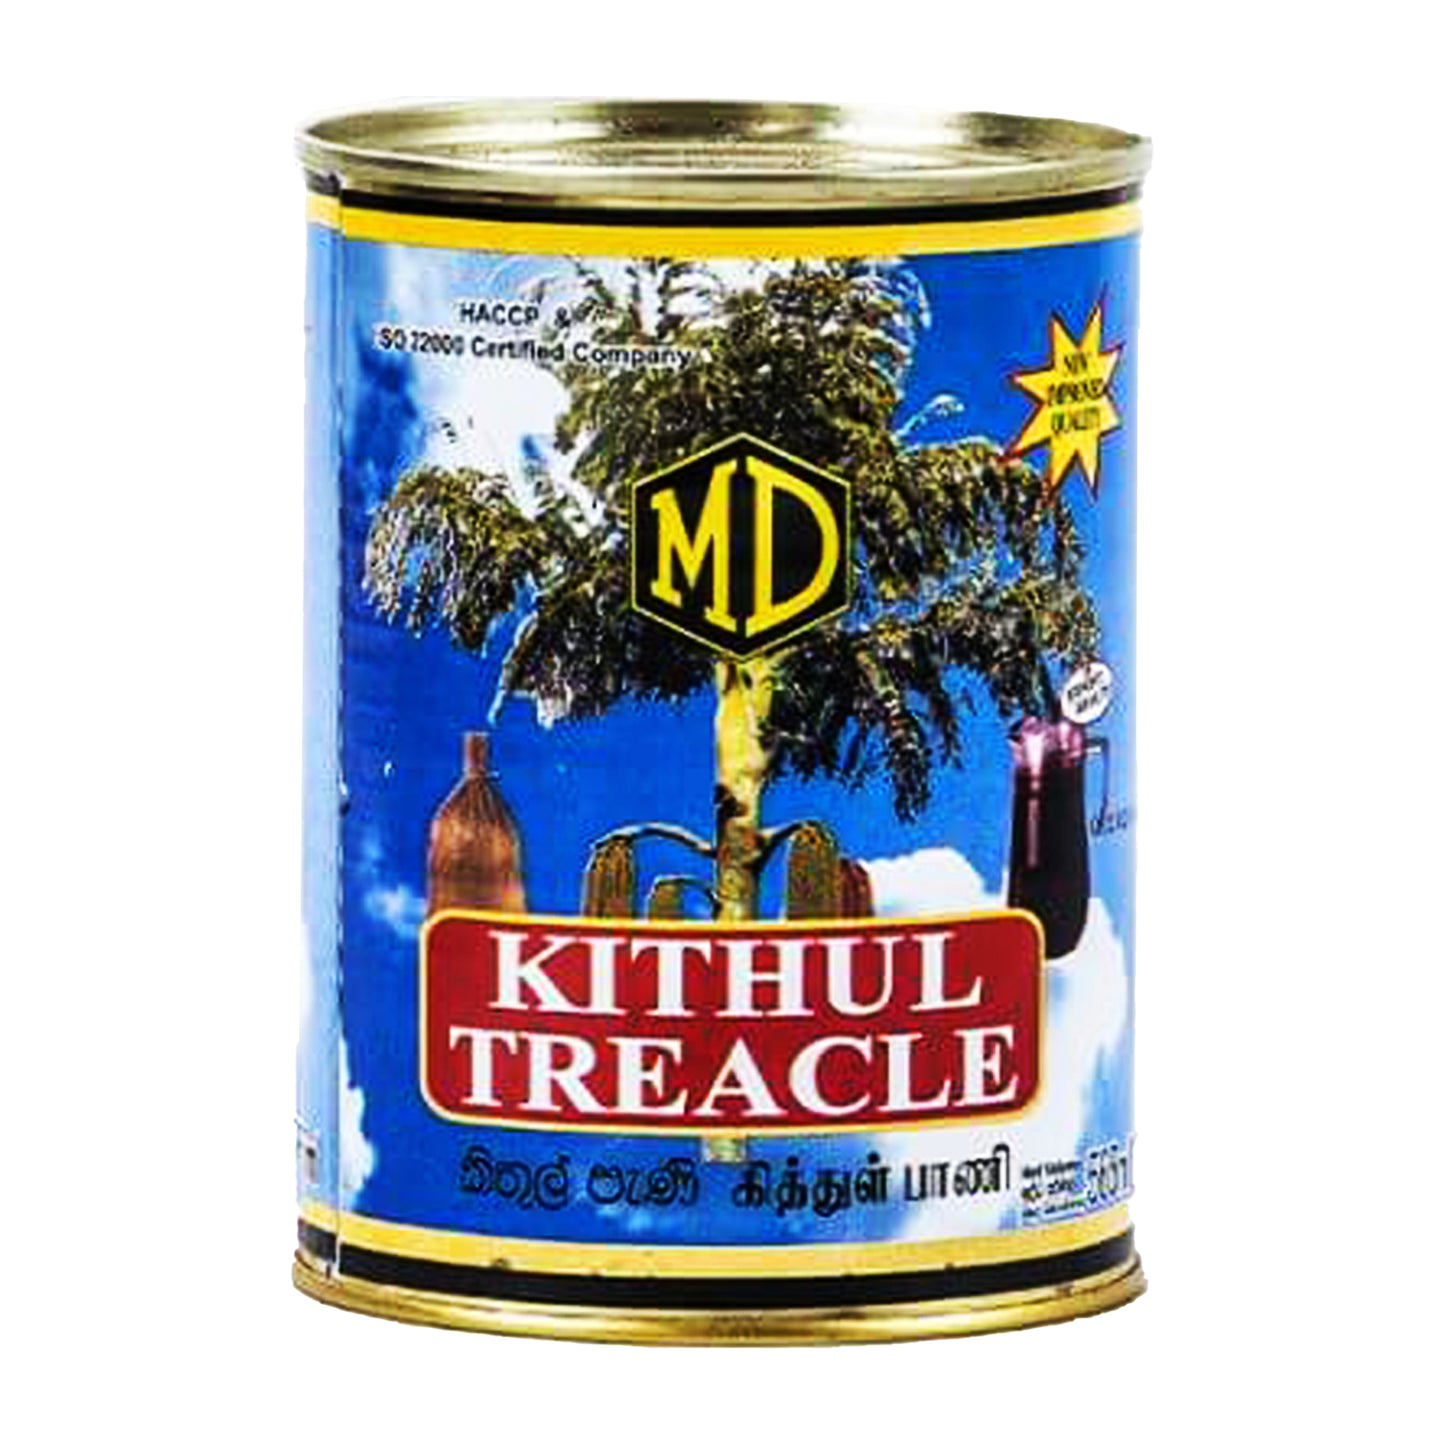 MD Kithul Treacle (170ml)